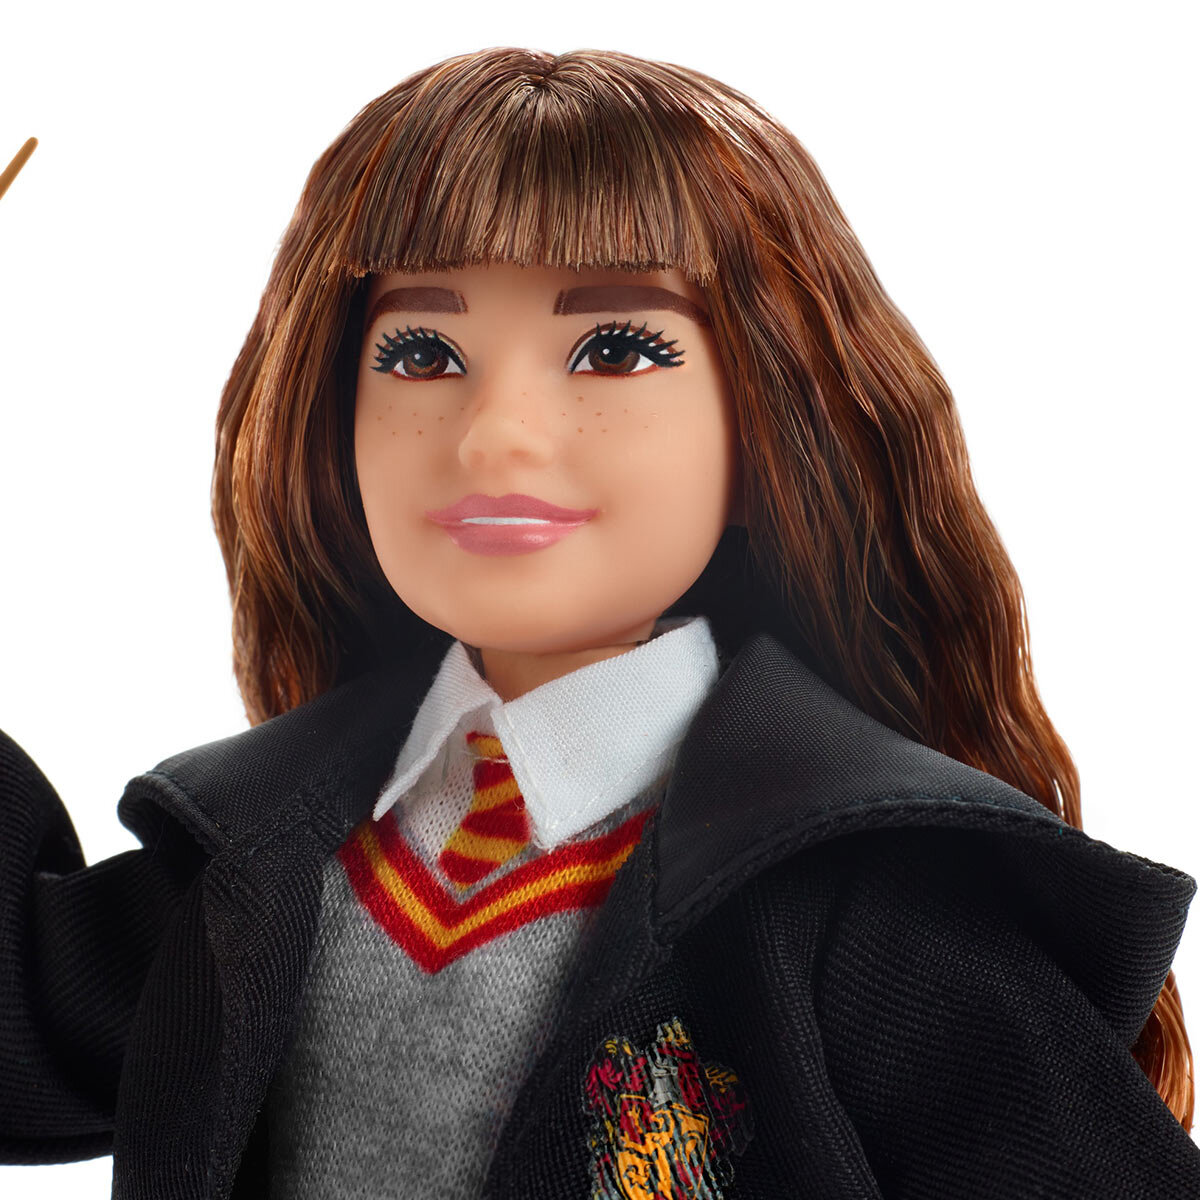 Buy Harry Potter Figure Set Close-up2 Image at Costco.co.uk